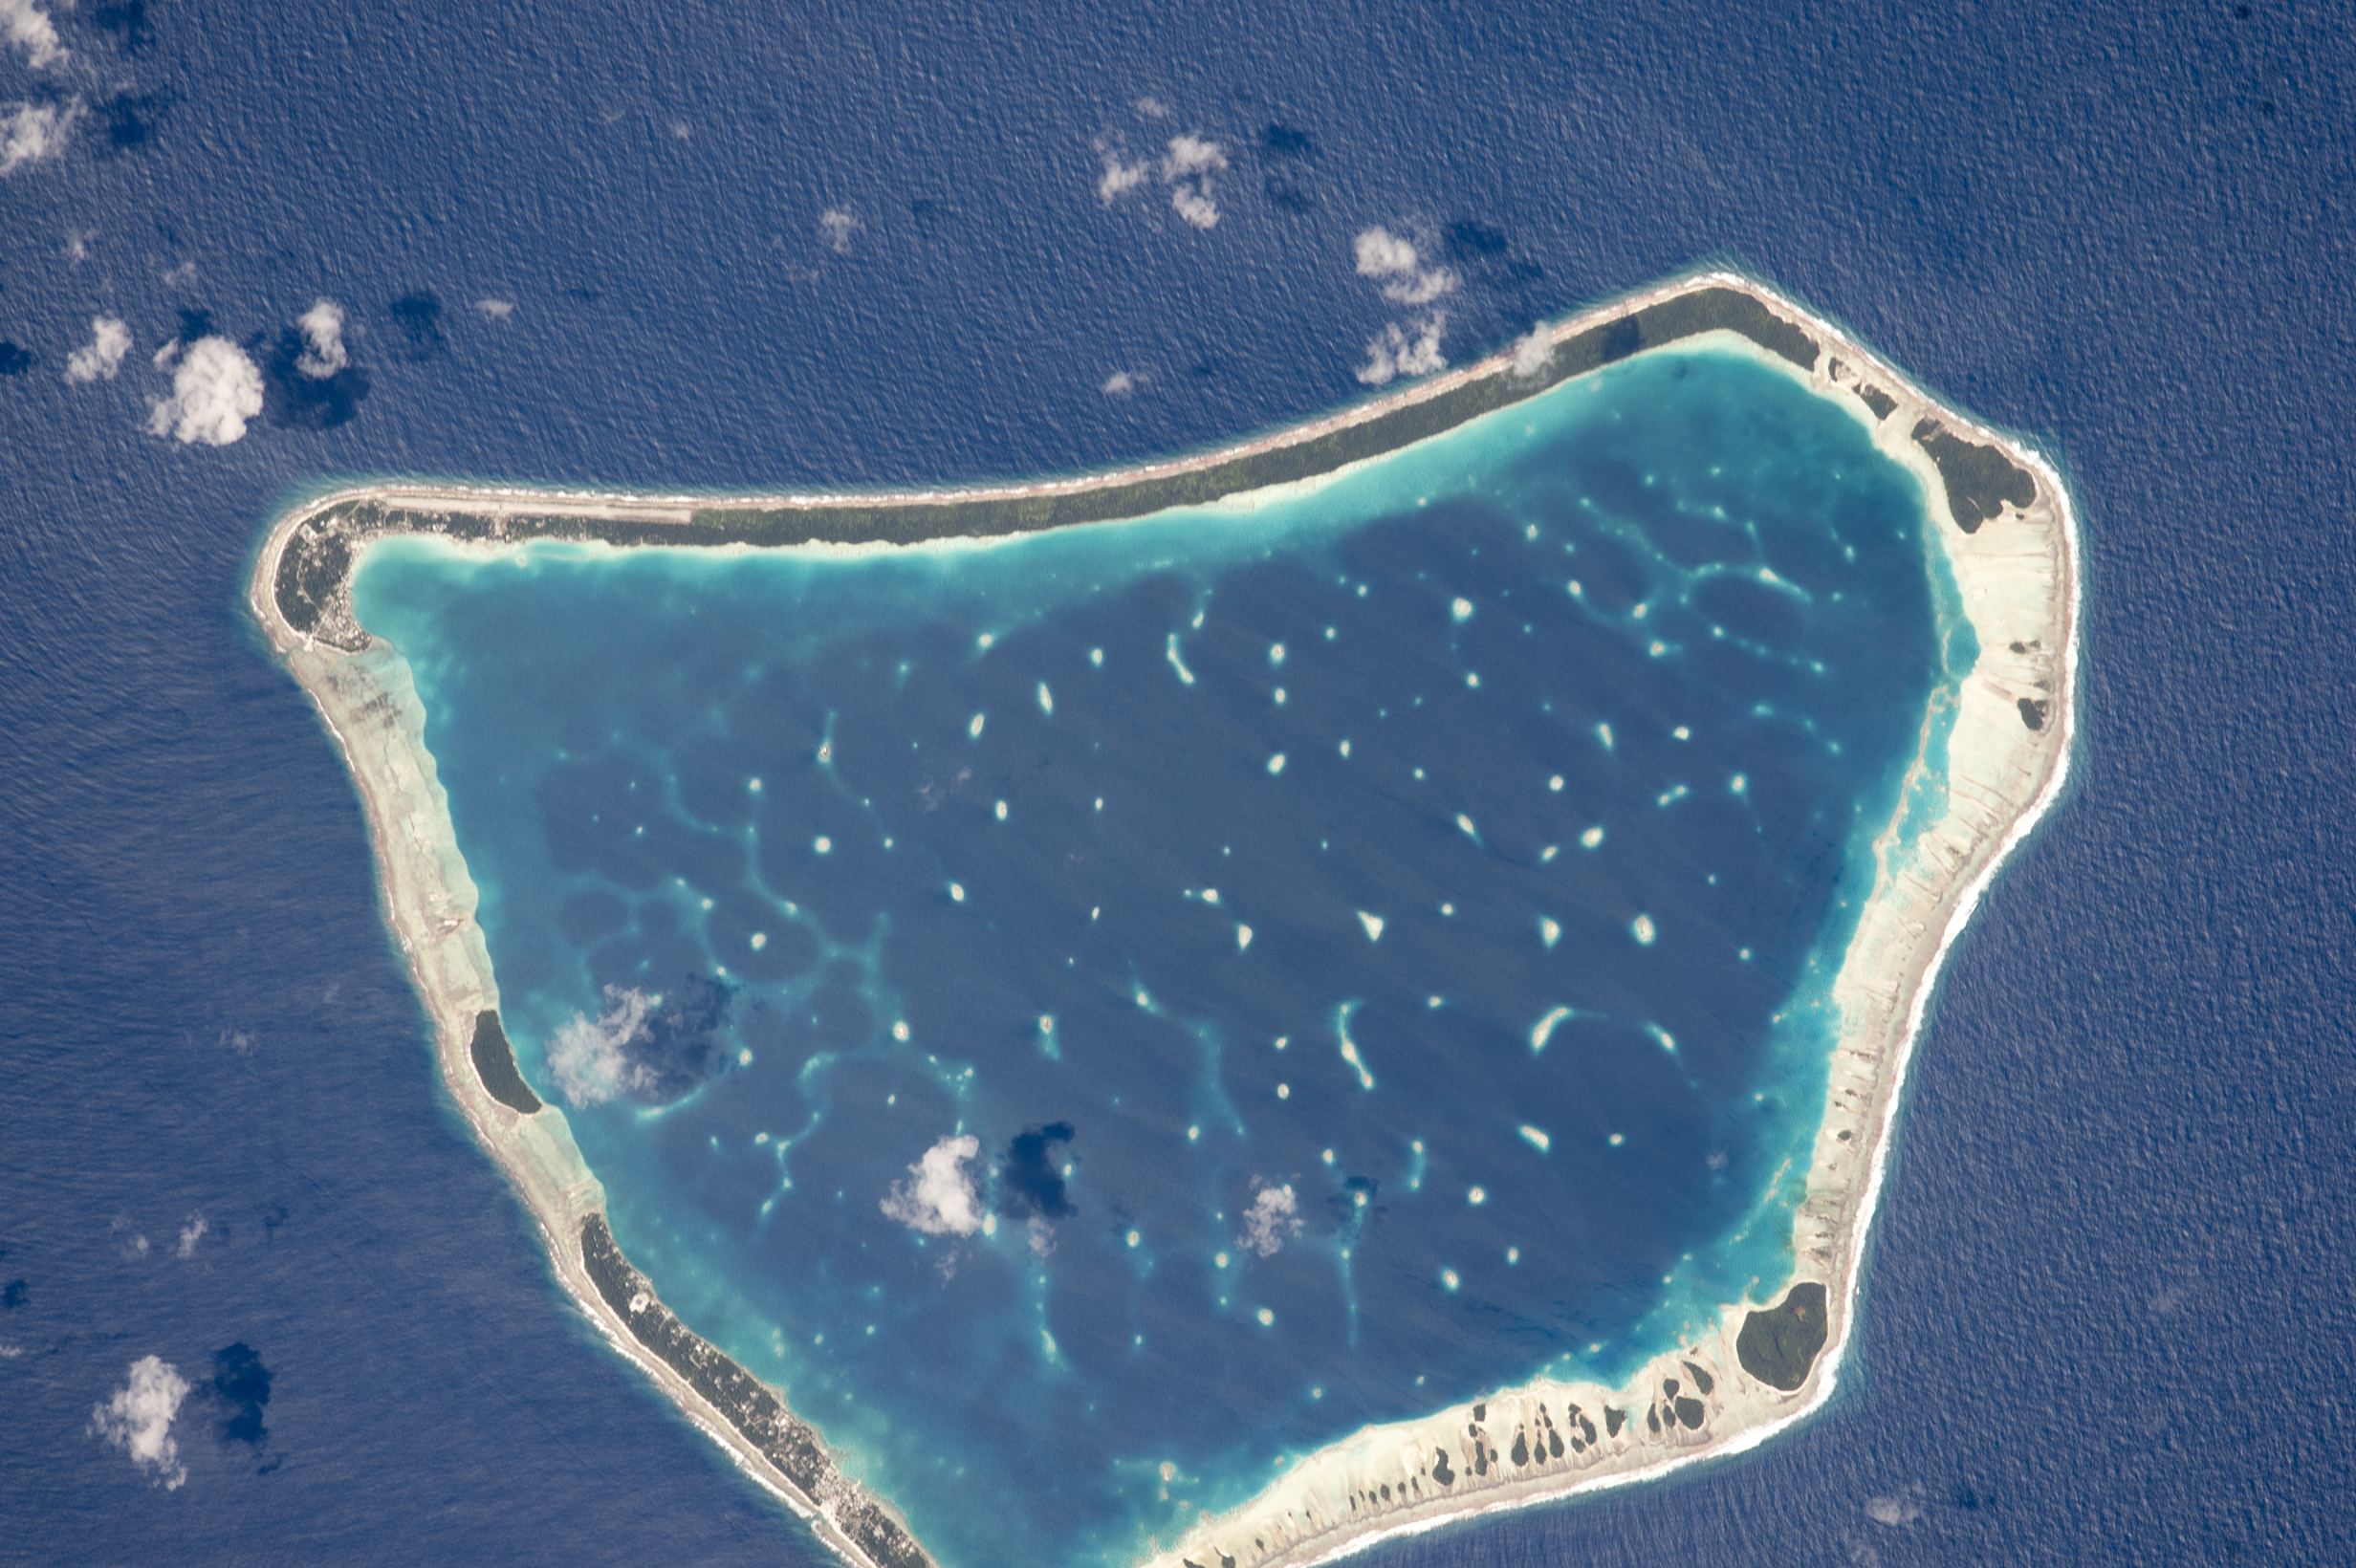 atoll island